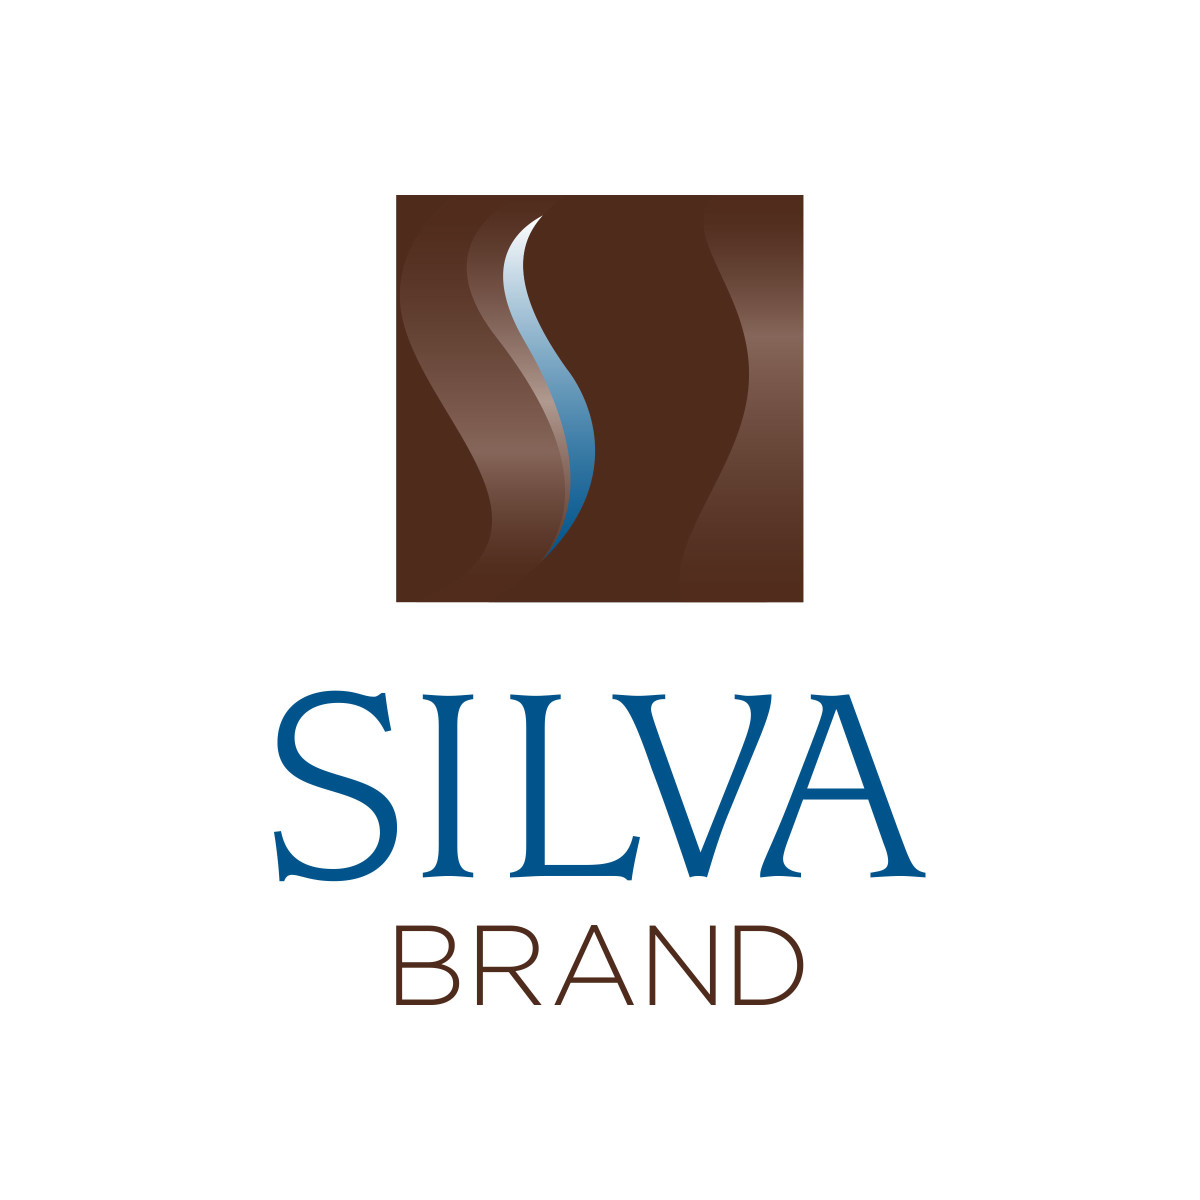 silva brand logo